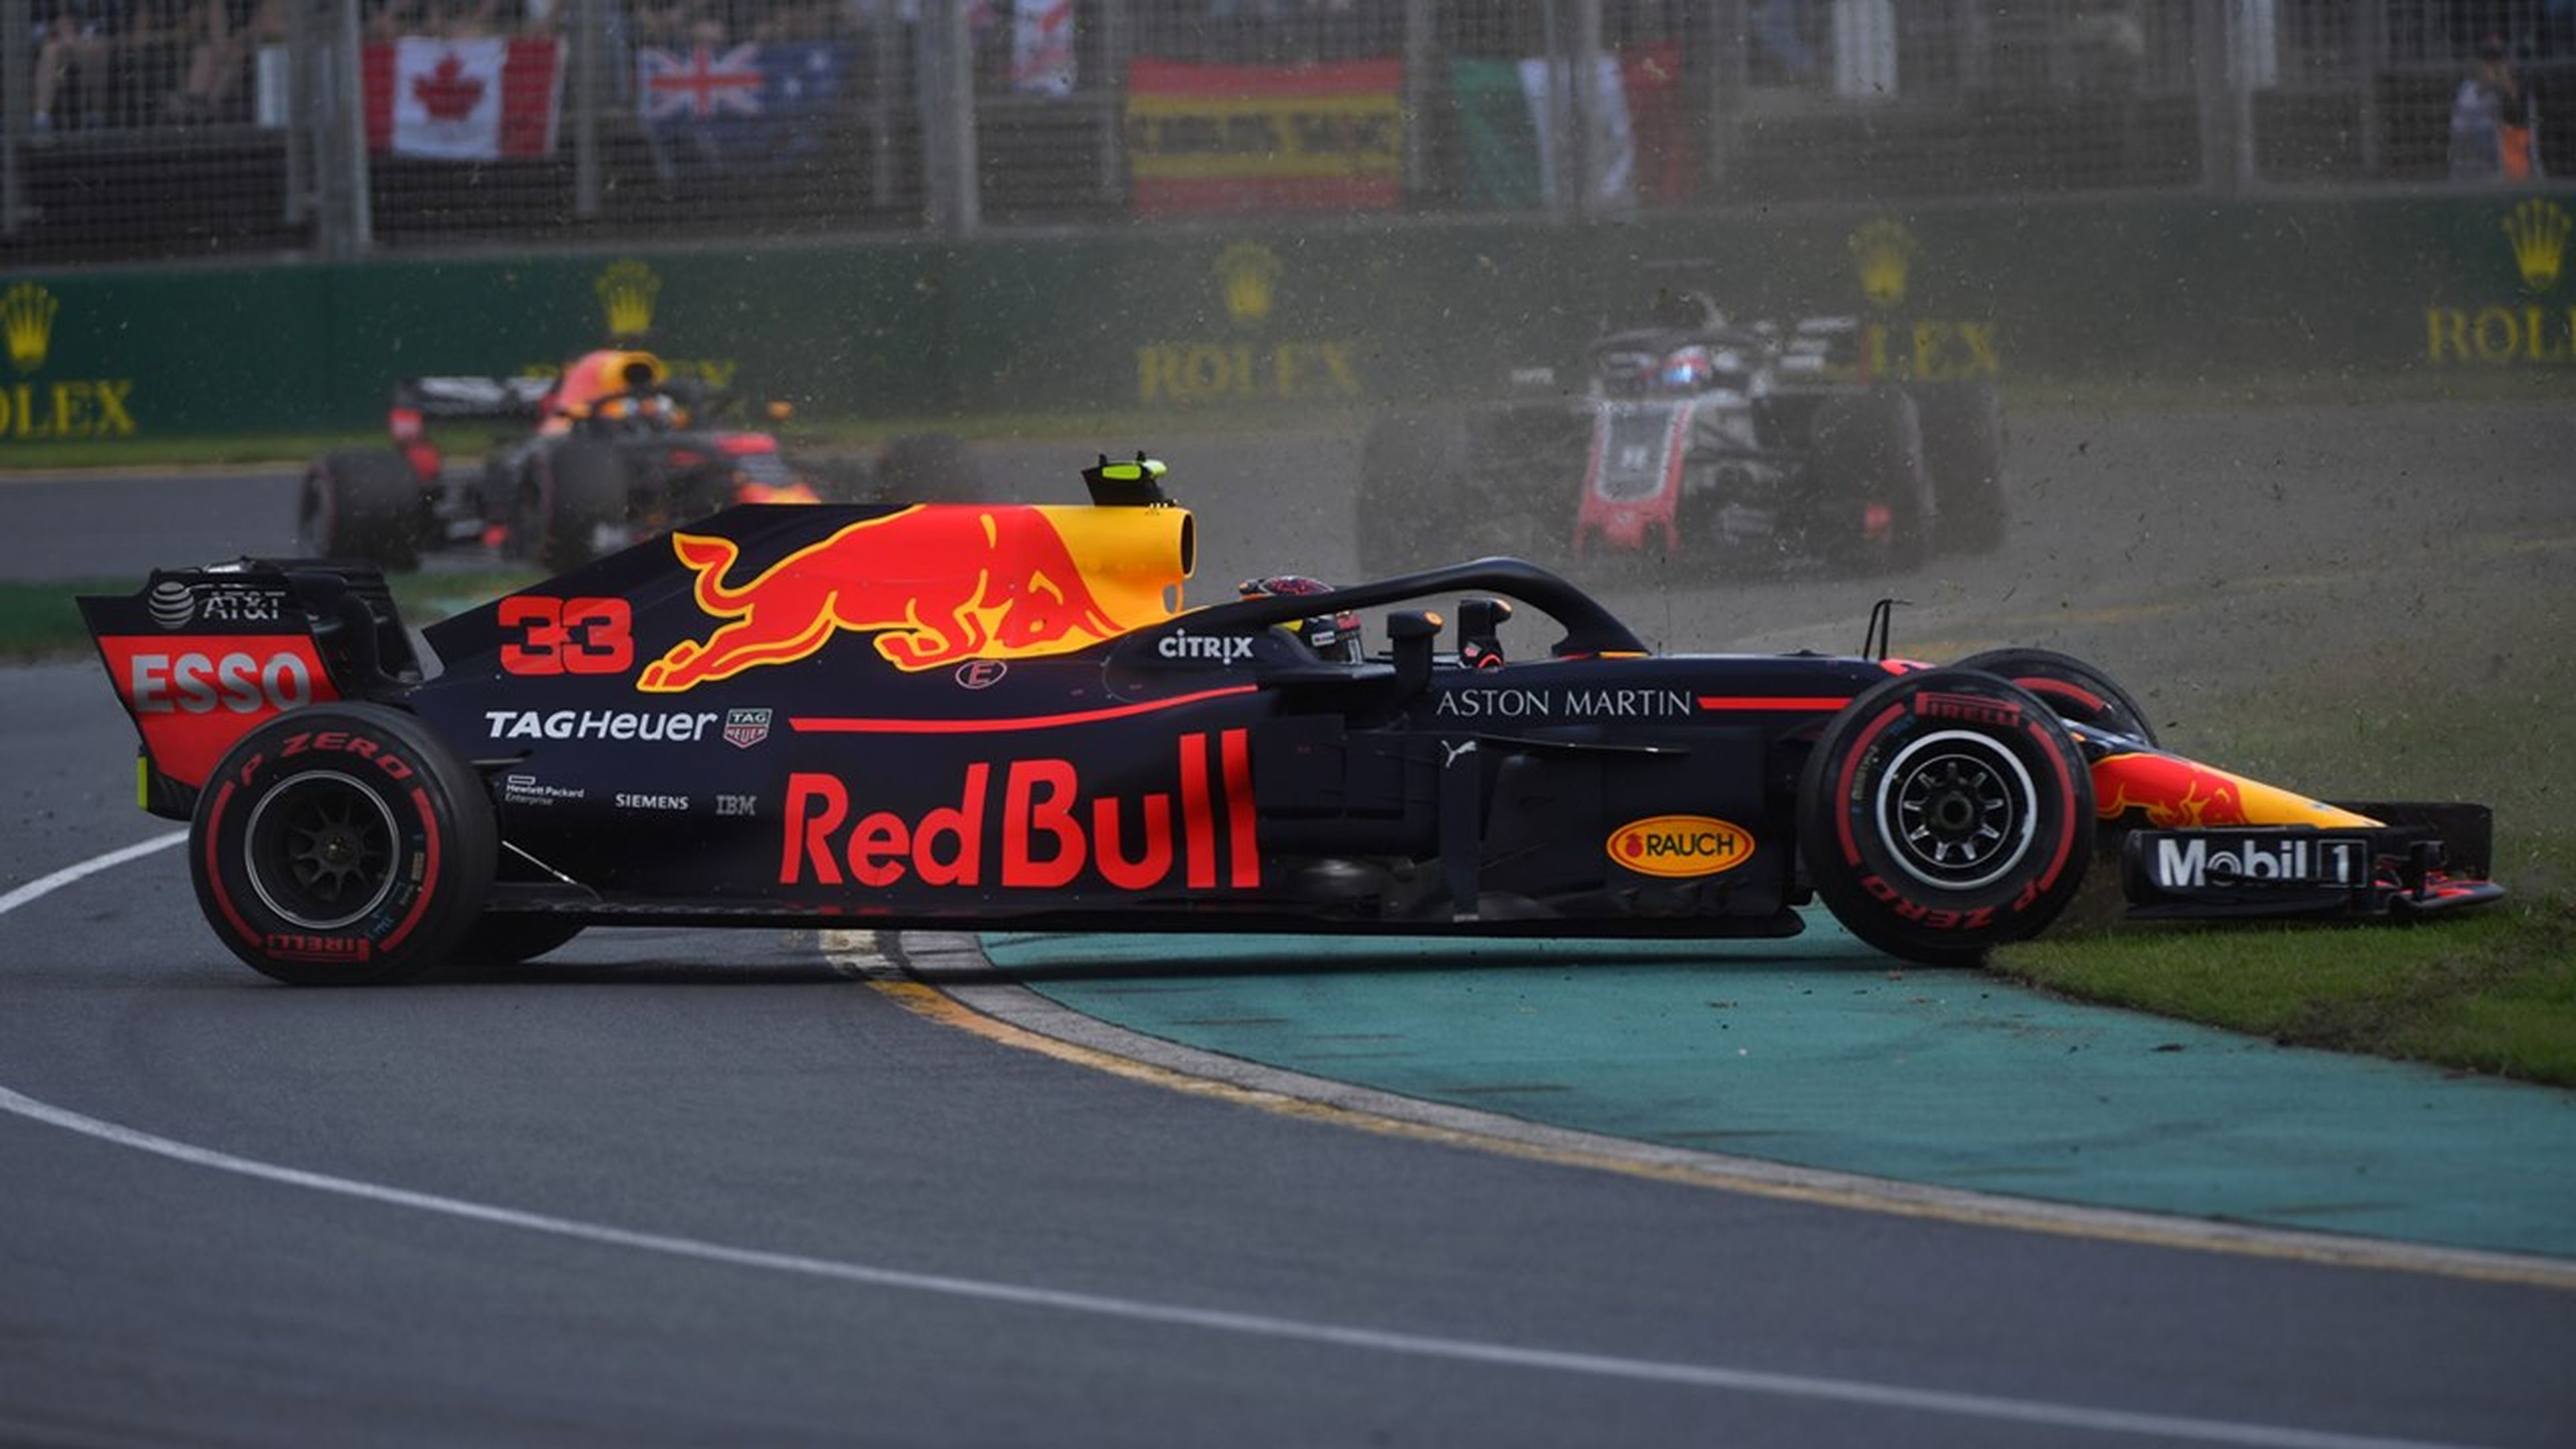 Trompo de Verstappen en el GP Australia 2018